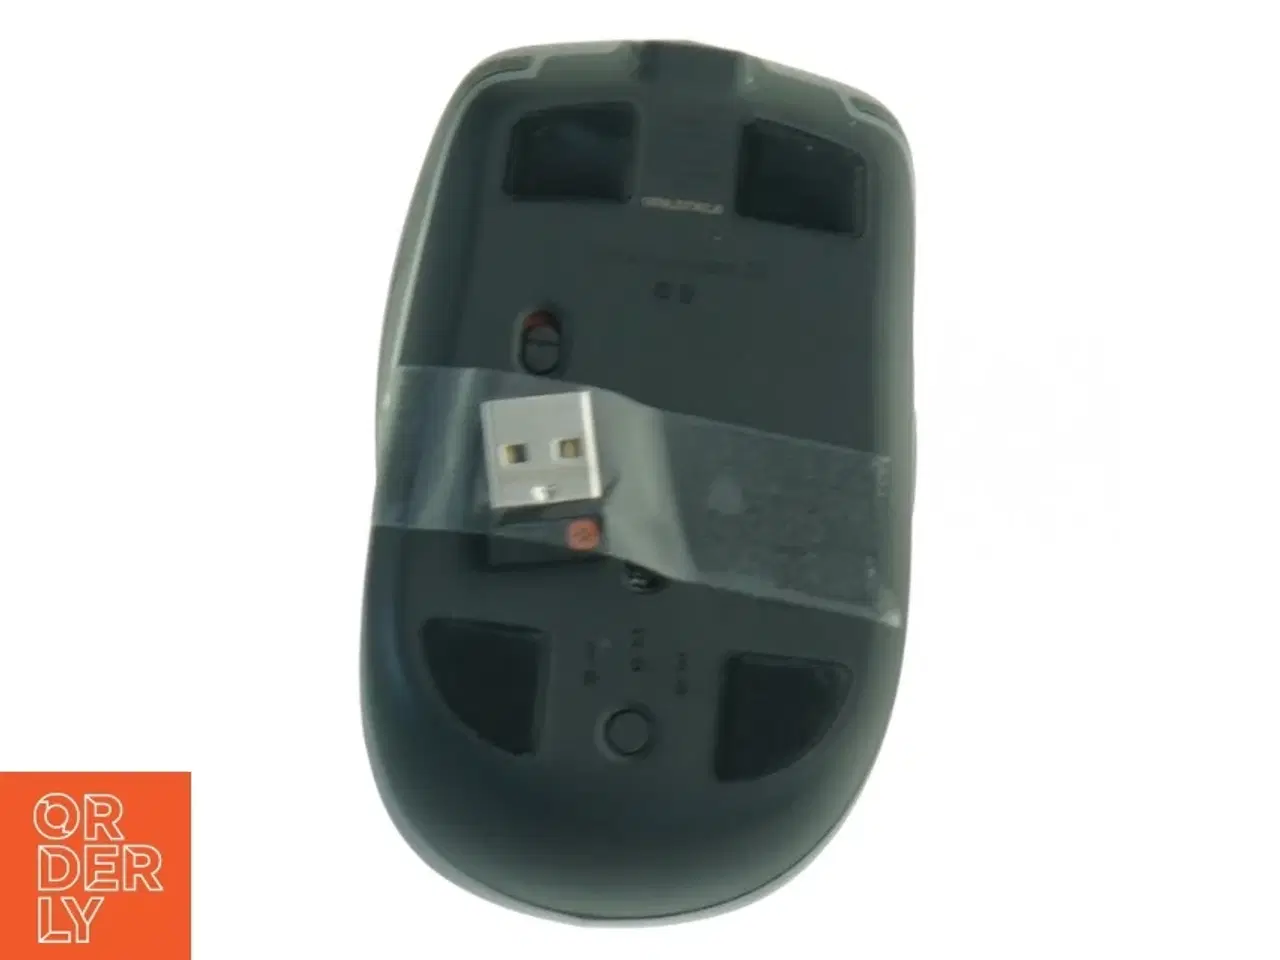 Billede 4 - Logitech trådløs mus fra Logi (str. 10 x 6 cm)